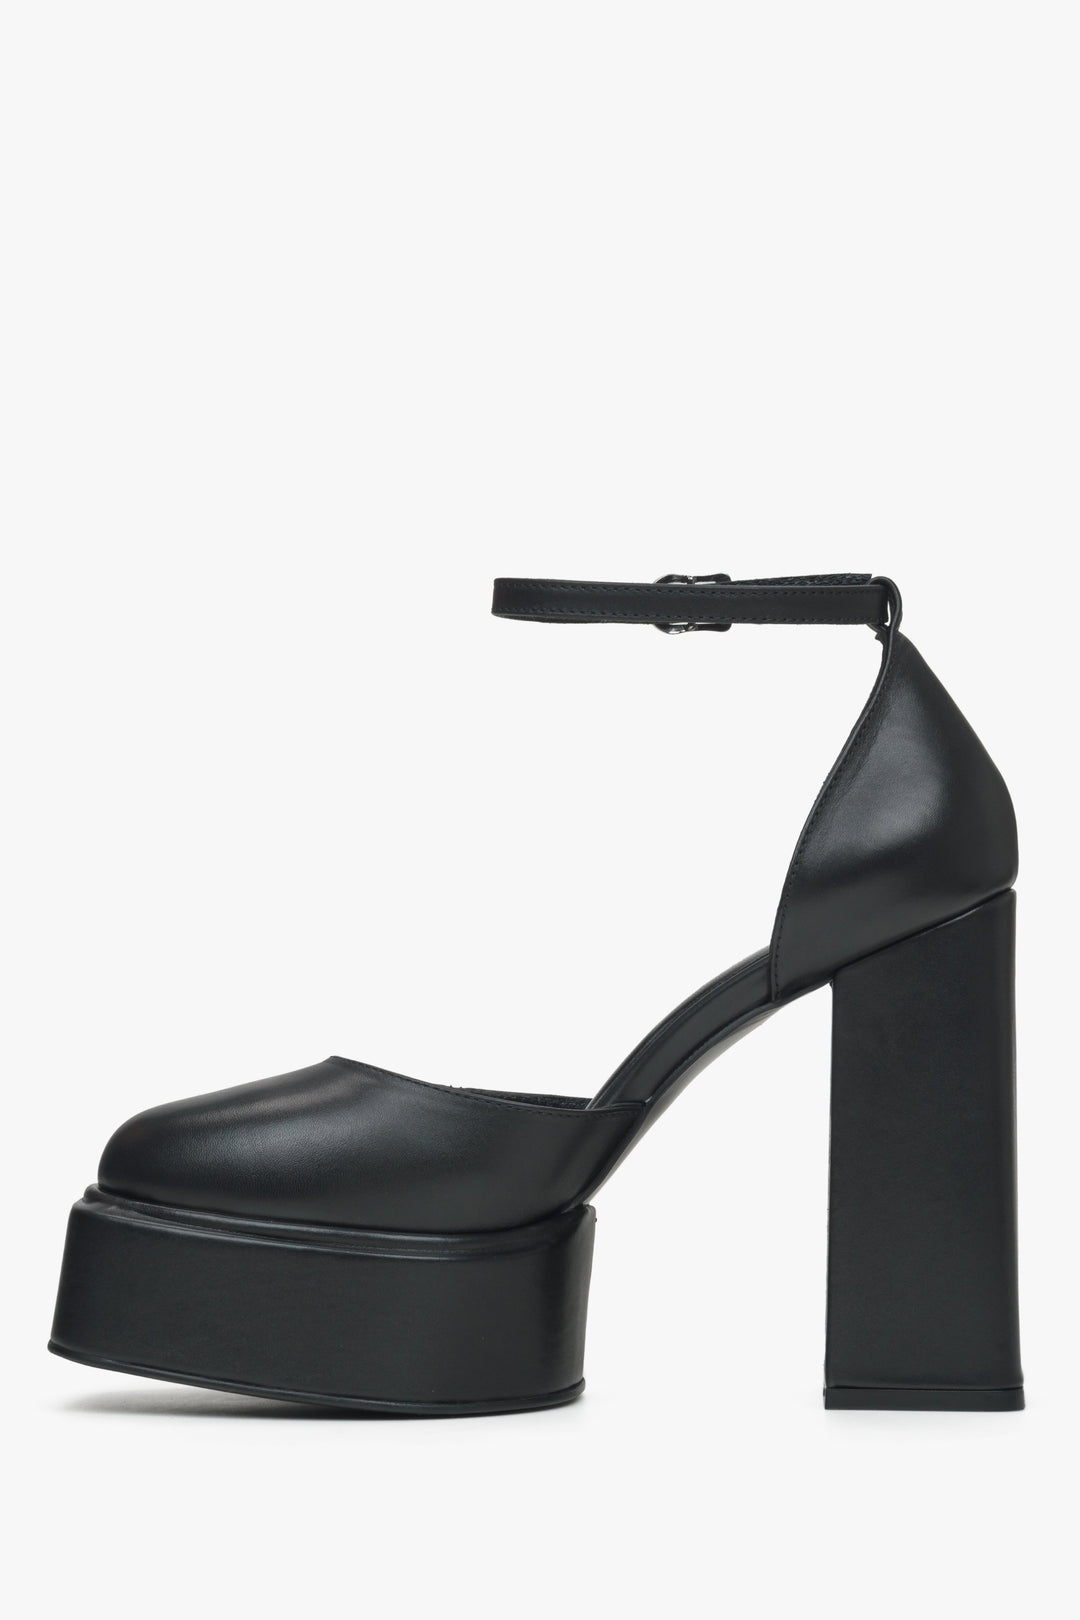 Women's leather platform sandals in black Estro.